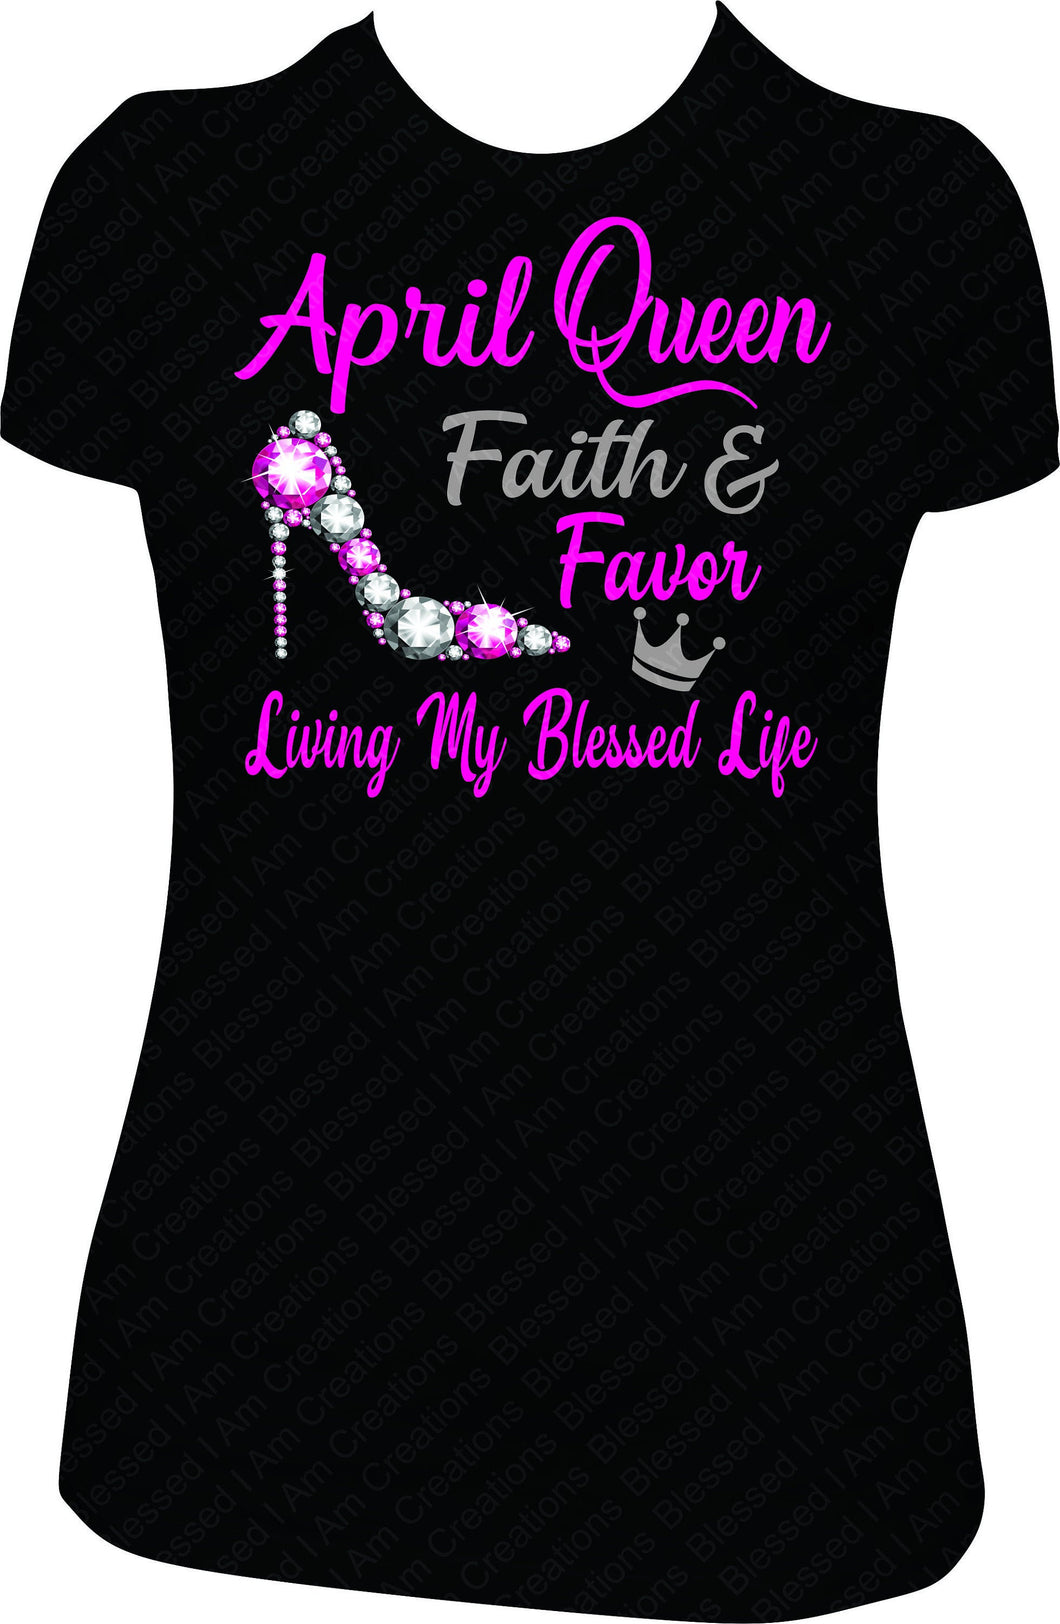 April Queen Faith & Favor Birthday Shirt